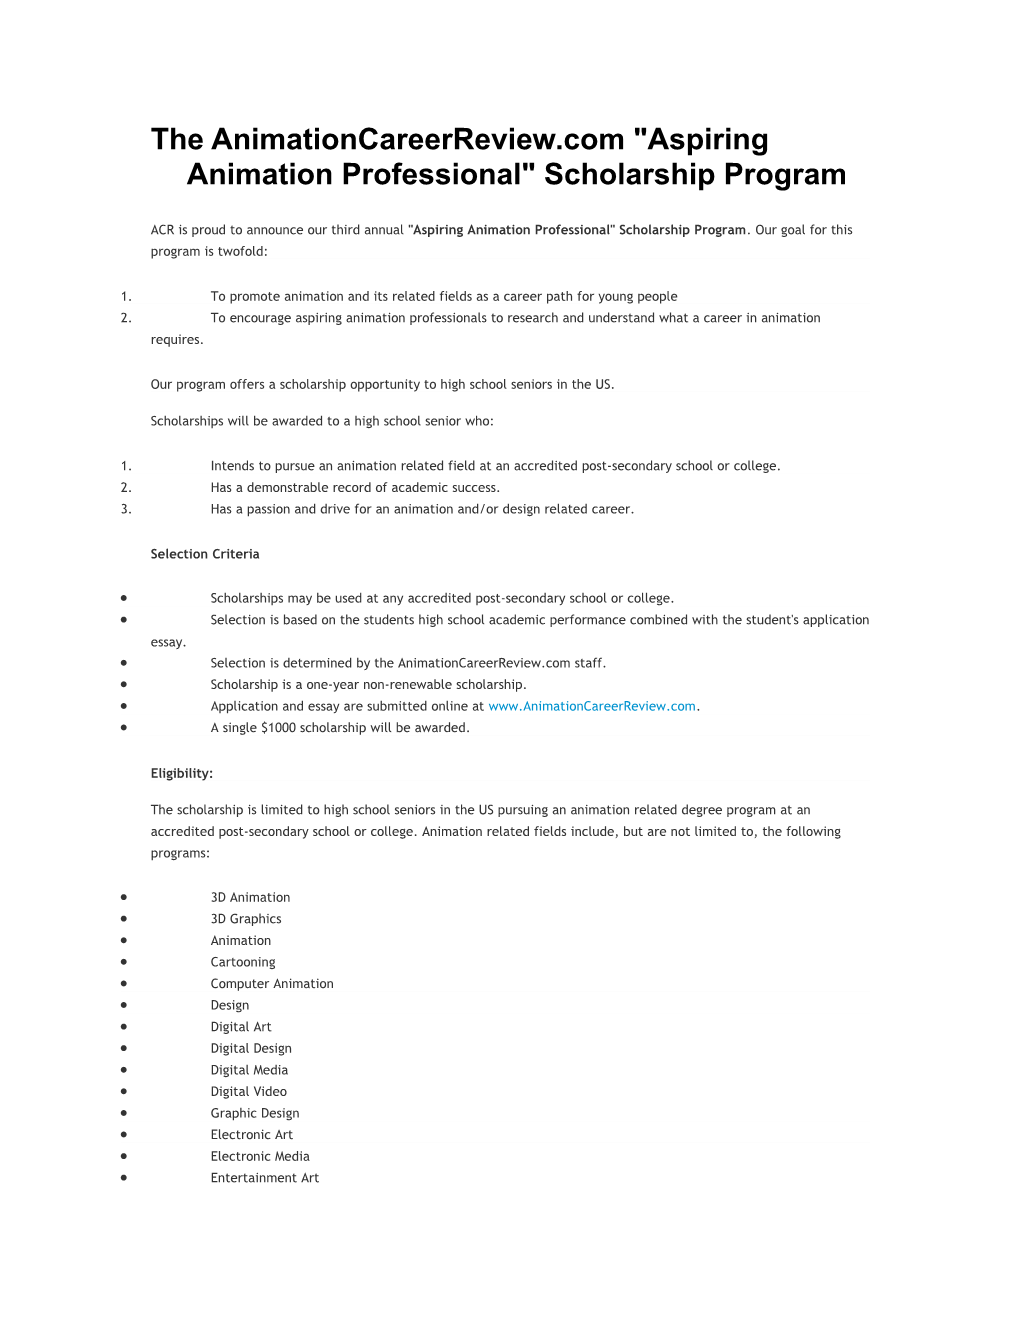 The Animationcareerreview.Com Aspiring Animation Professional Scholarship Program